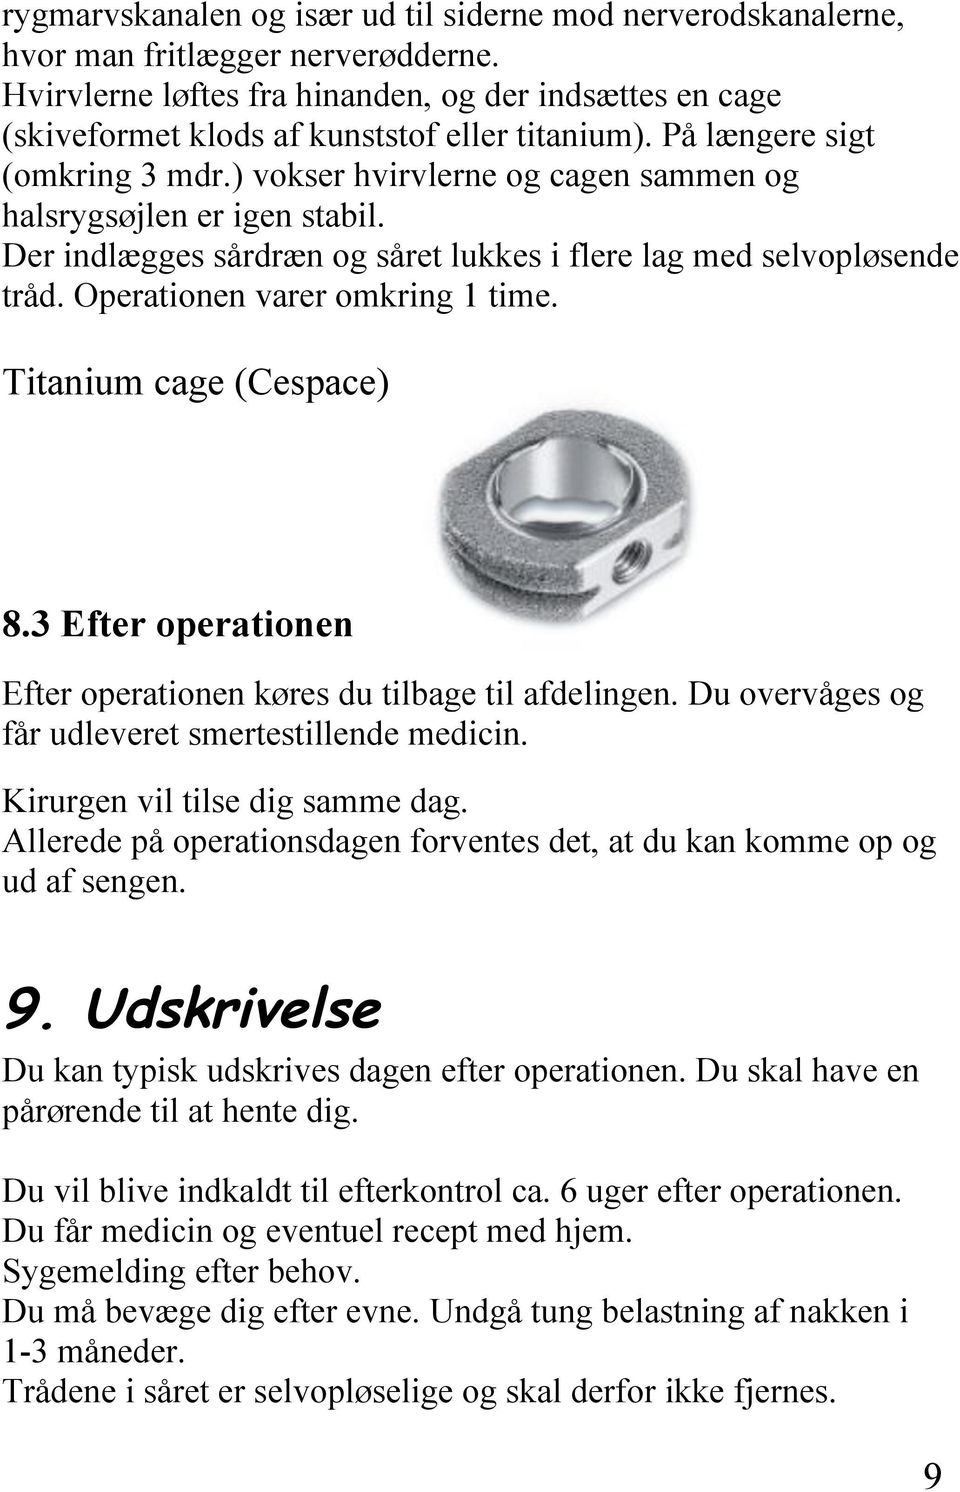 Operation for discusprolaps i nakken - PDF Free Download